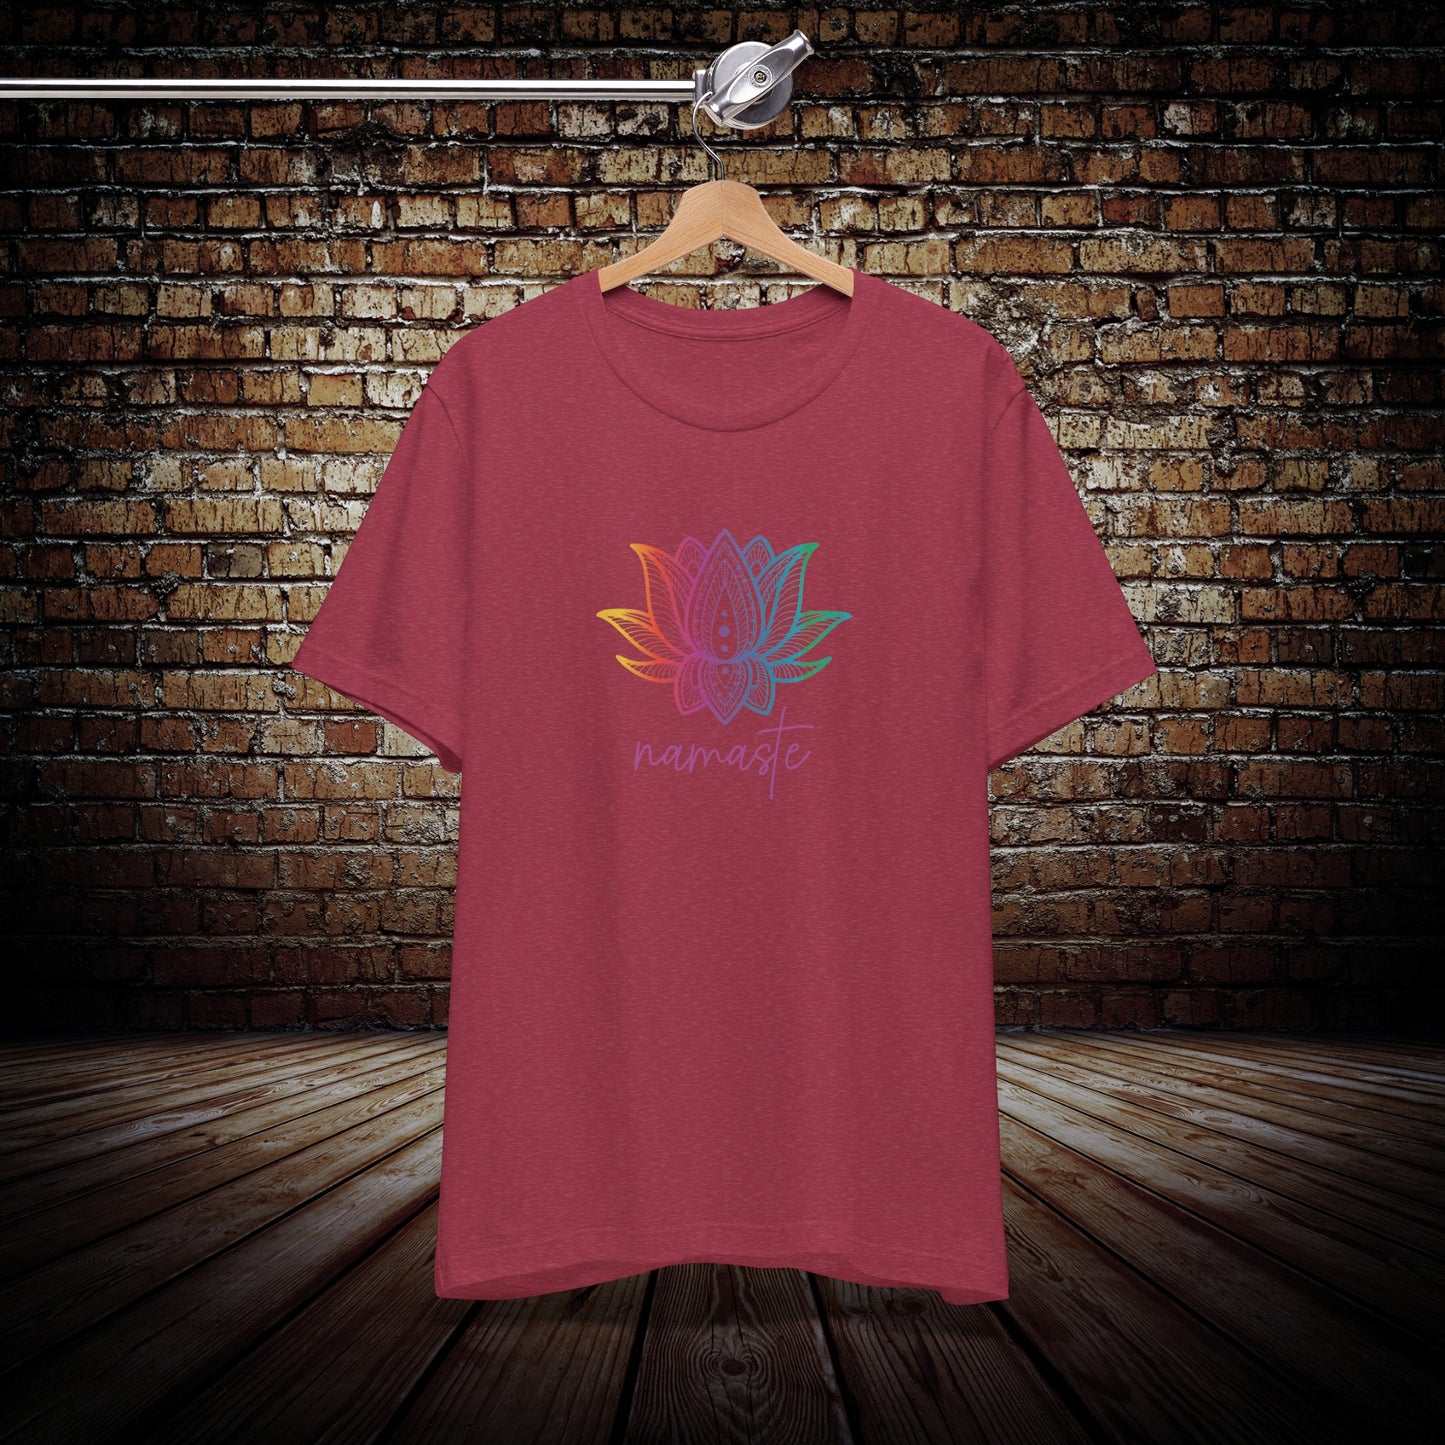 Rainbow Namaste - Yoga Inspired T-Shirt